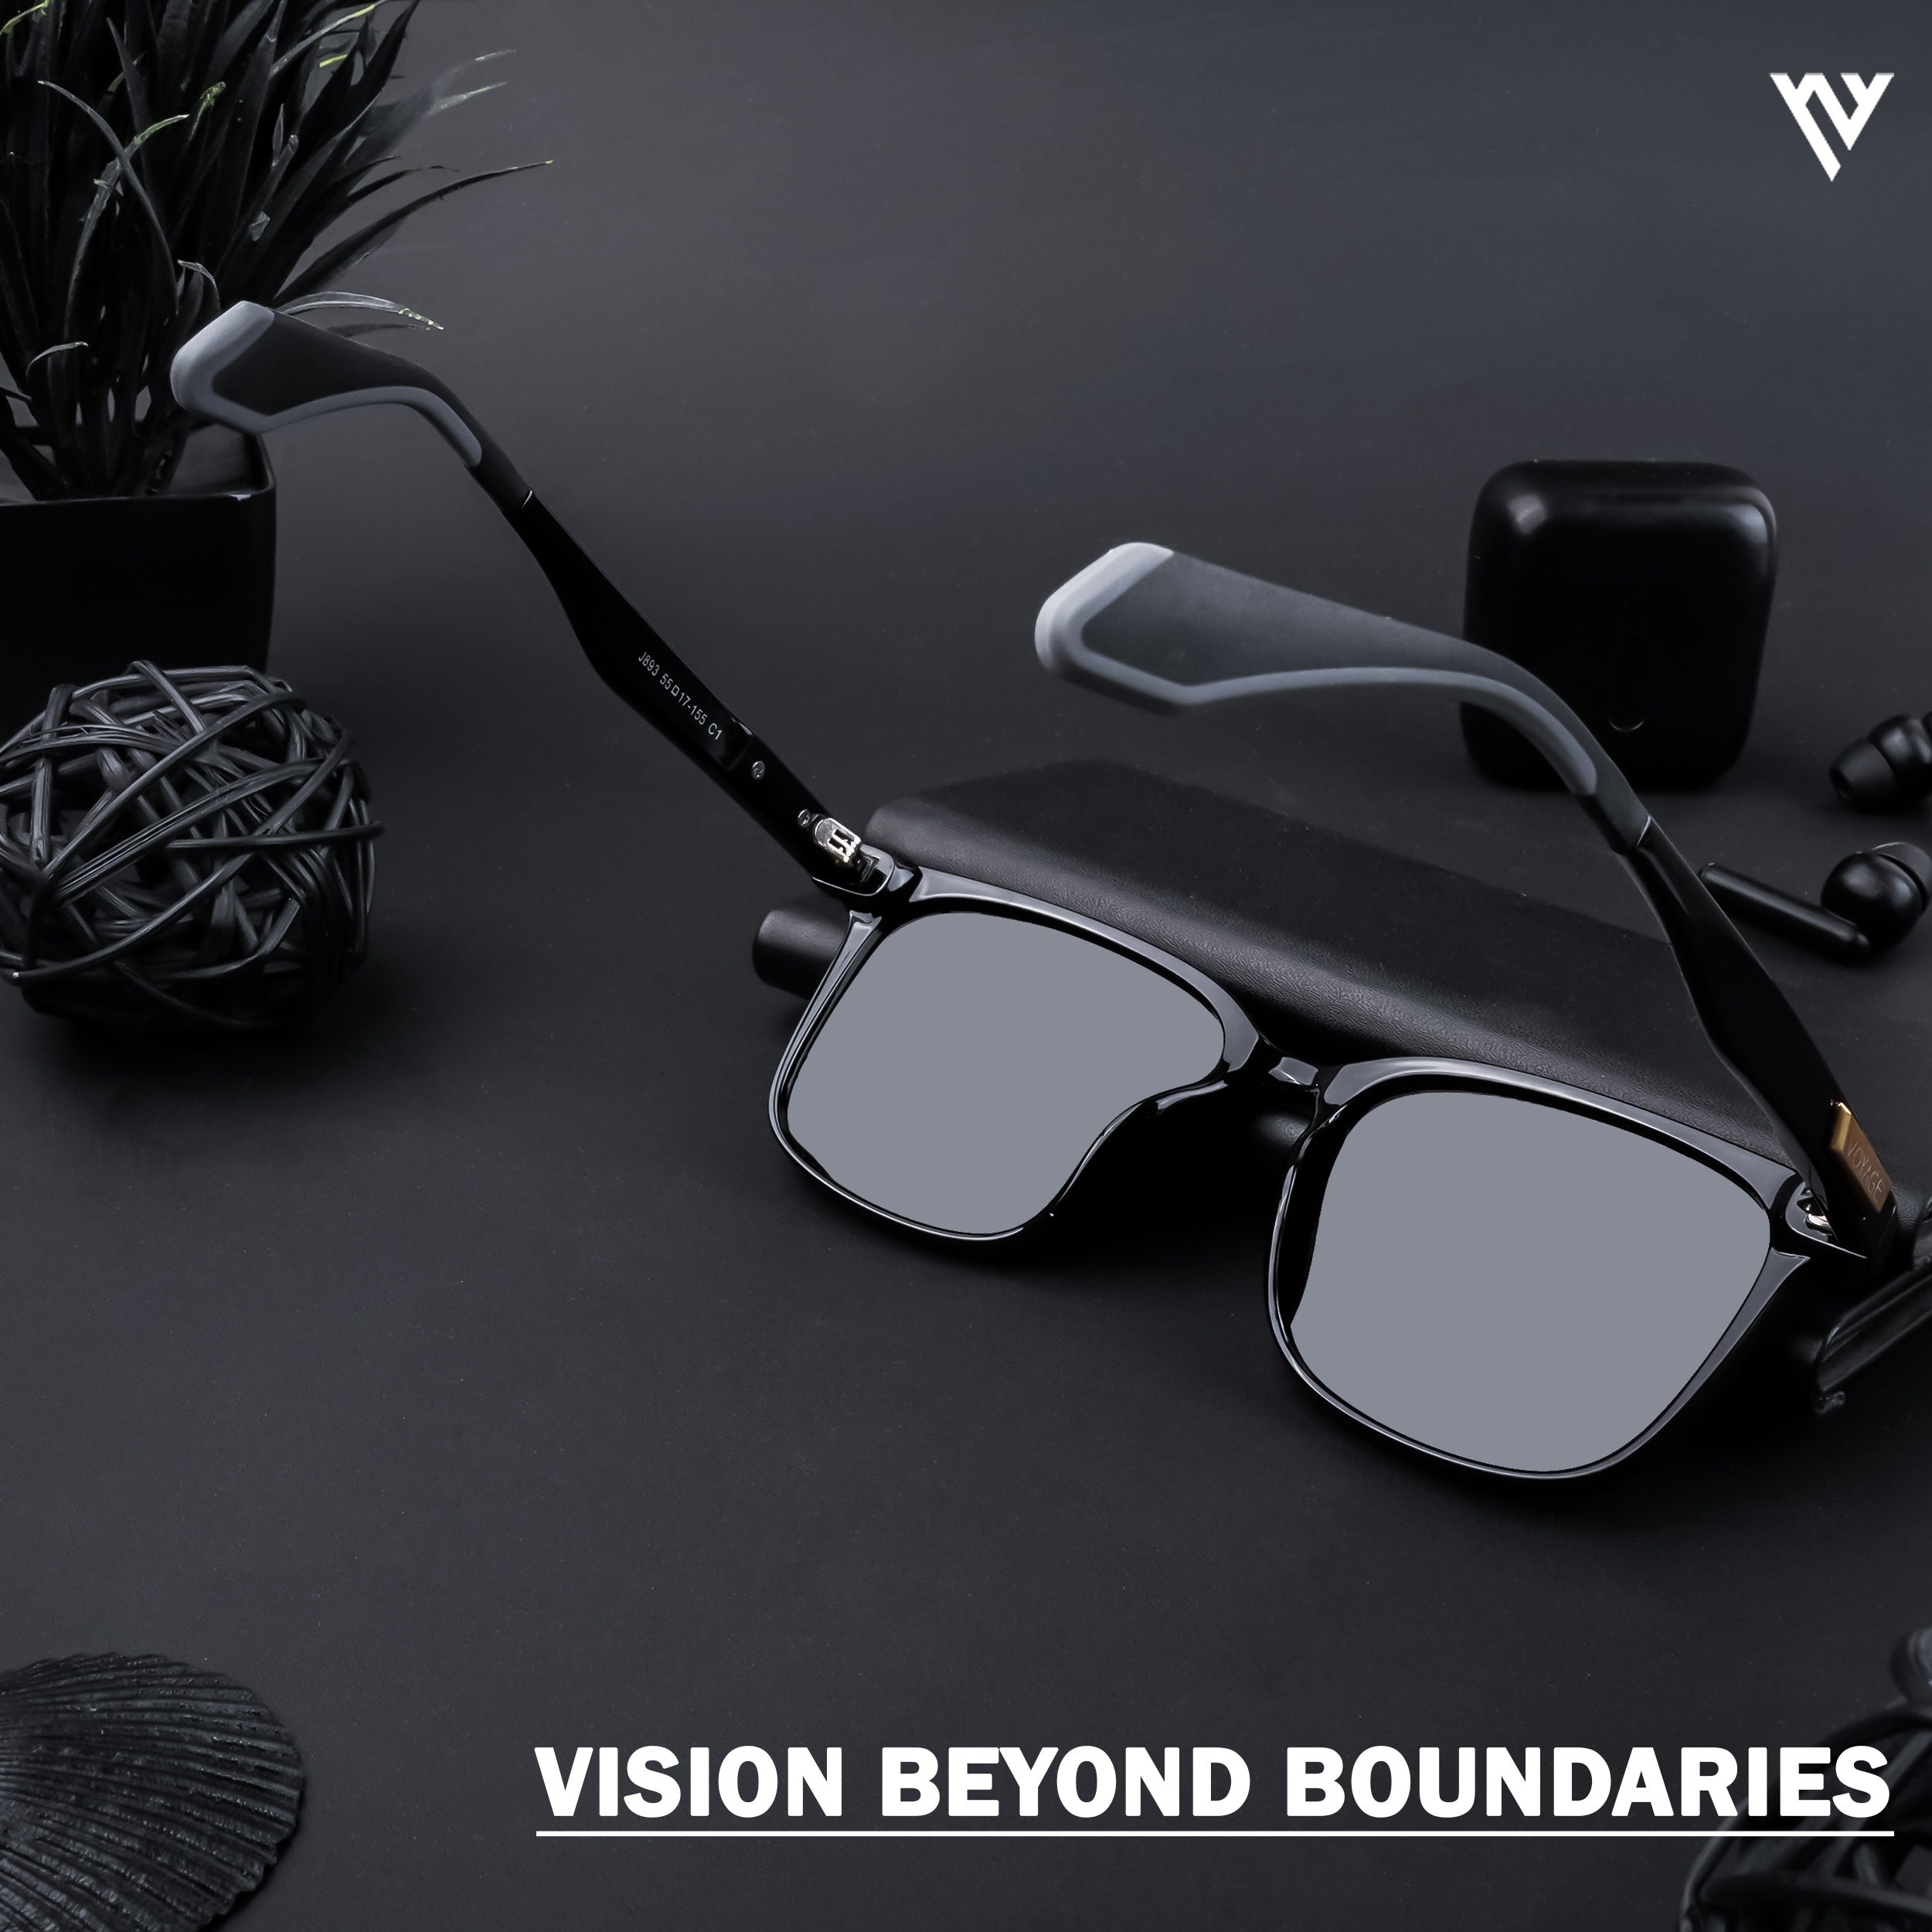 Voyage Active Shine Black Polarized Wayfarer Sunglasses for Men & Women - PMG4459